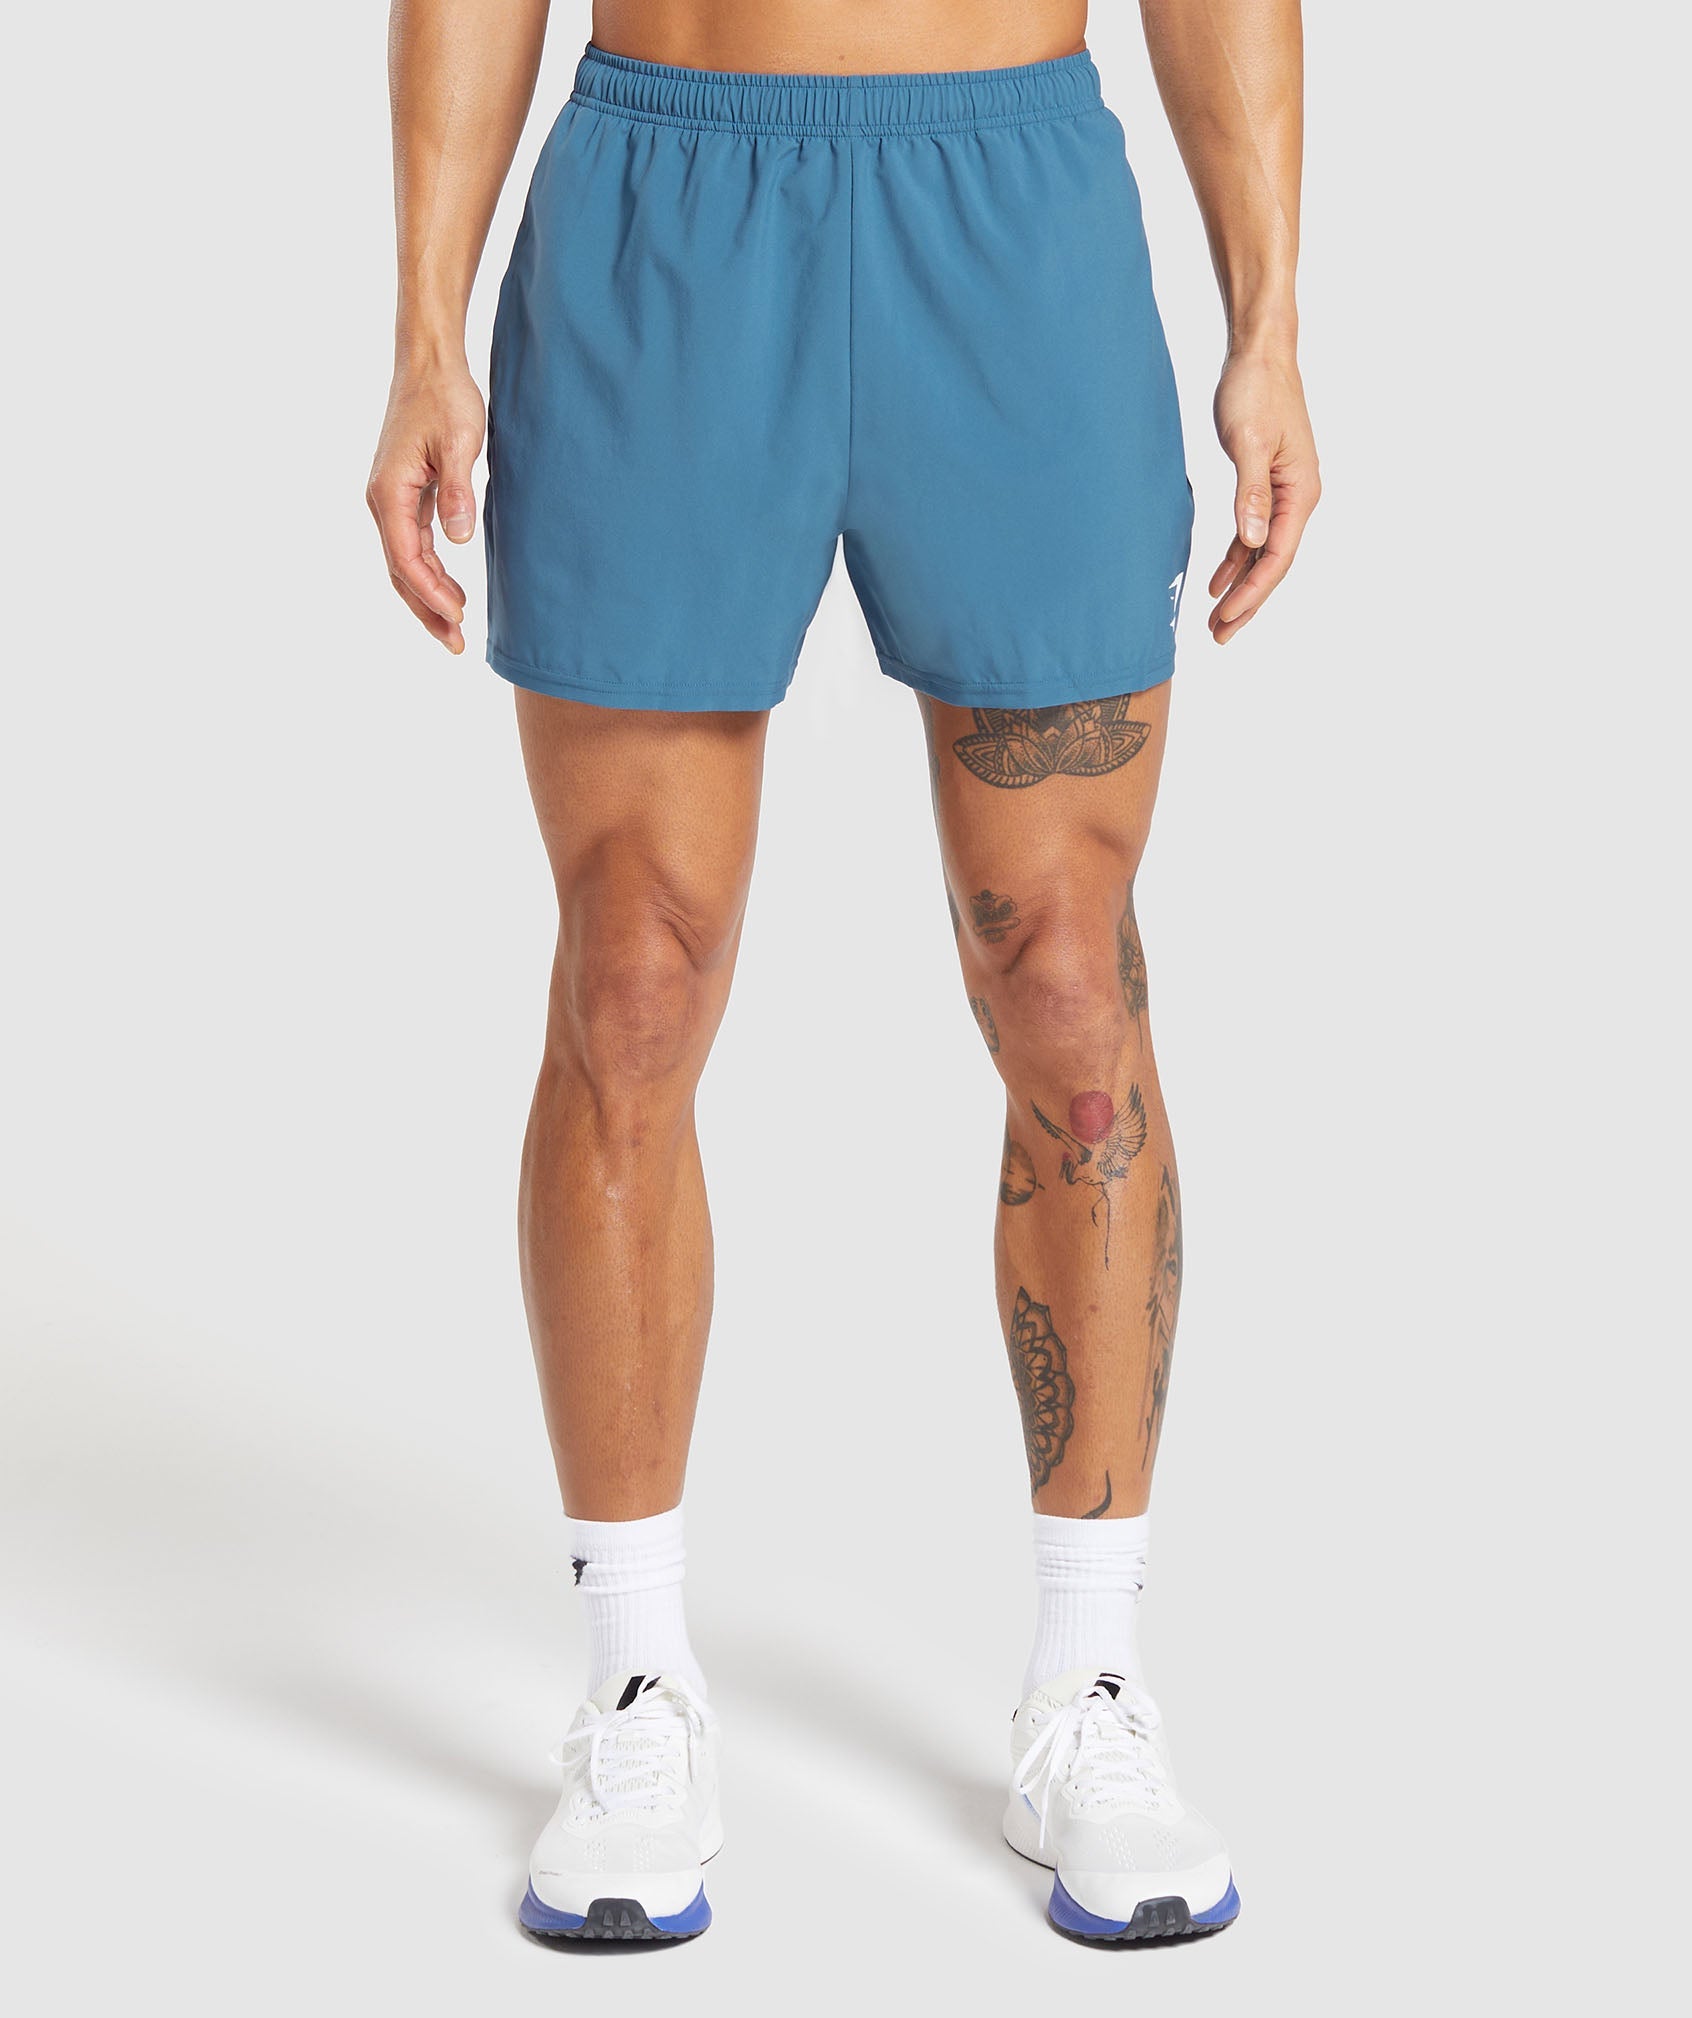 Gymshark Arrival 5 Shorts - Utility Blue